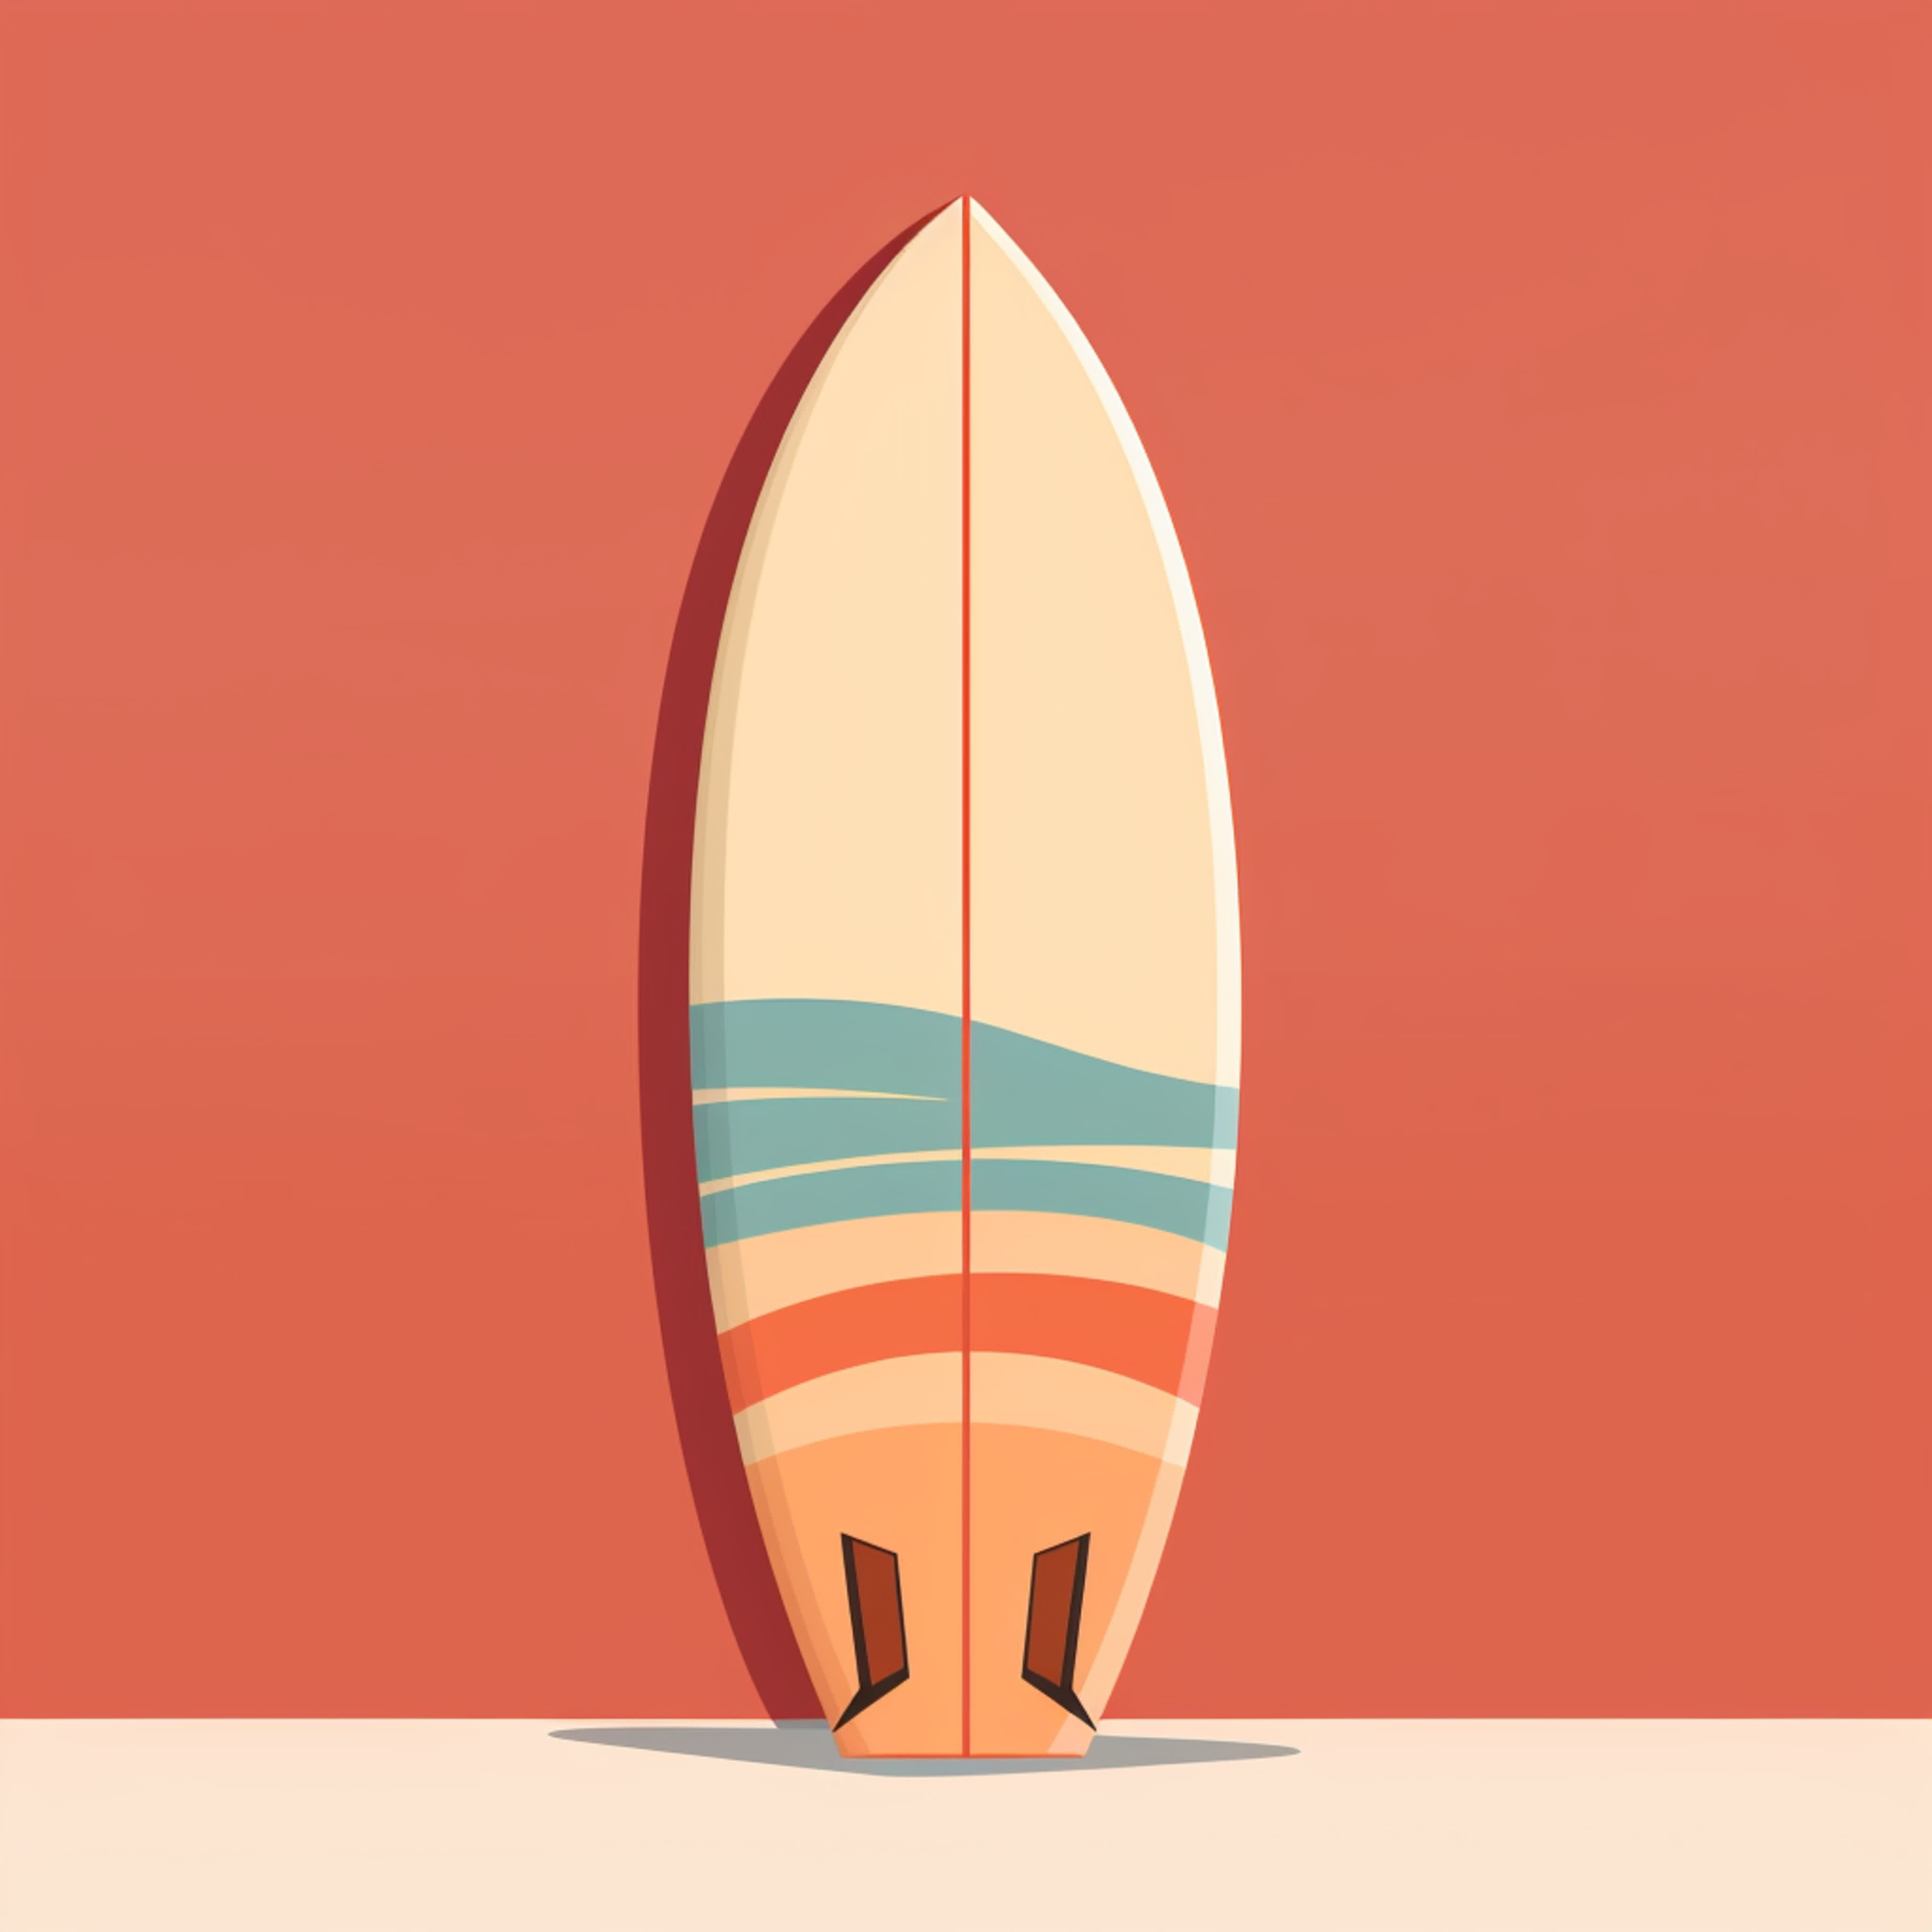 v3ri4 m4i m41nd minimalistic 2d surfboard icon 7c81811a 3ea9 4978 80a4 6f736508f643 777